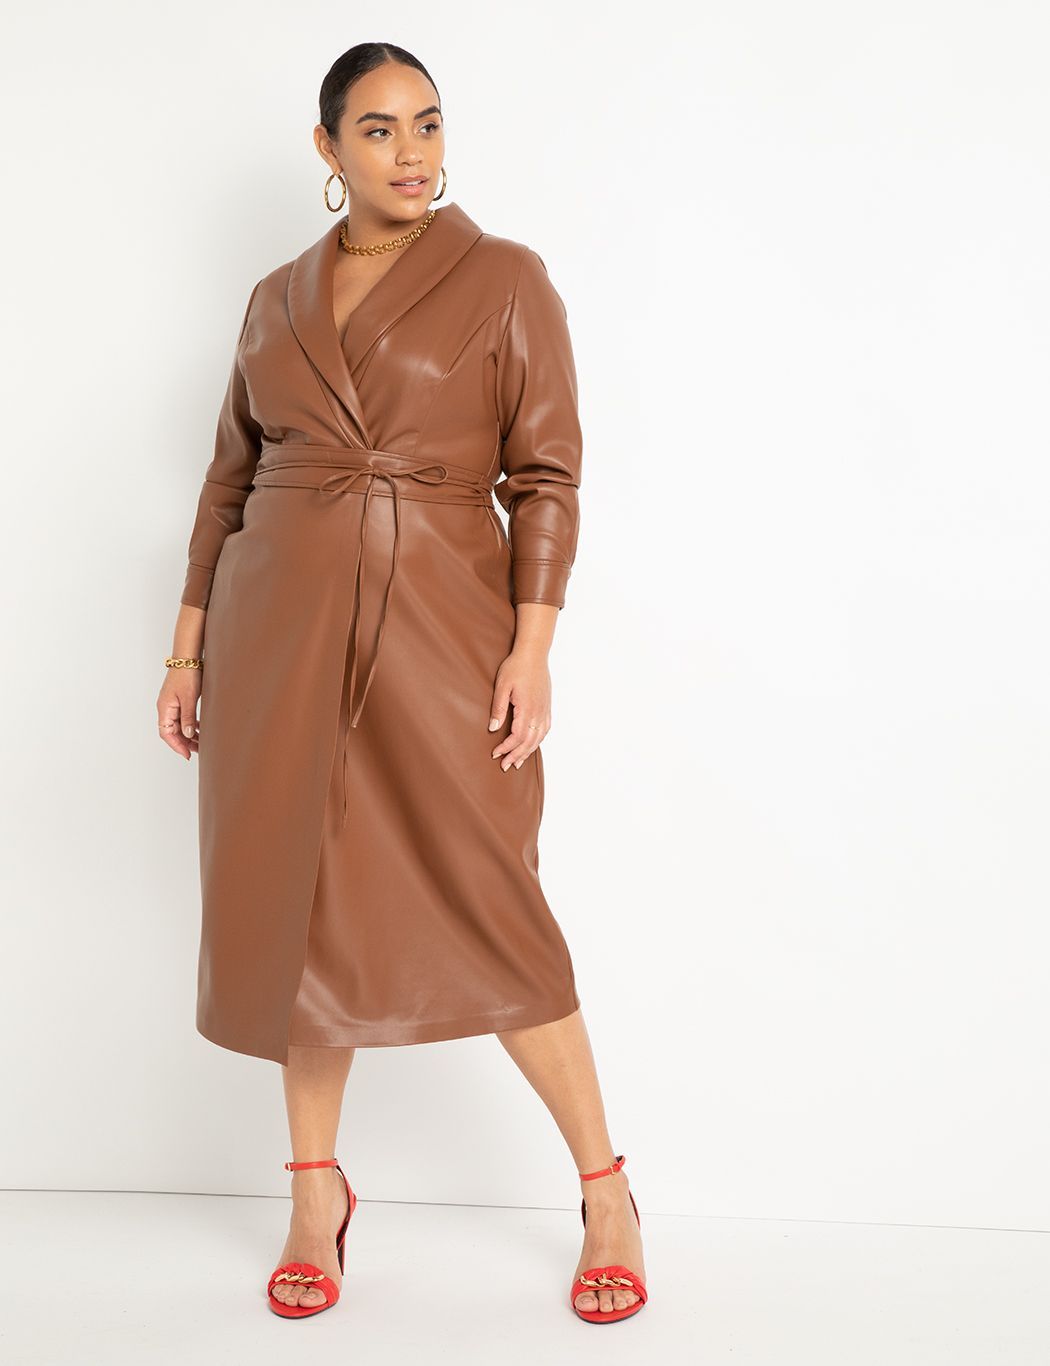 Shawl Collar Faux Leather Dress | Eloquii